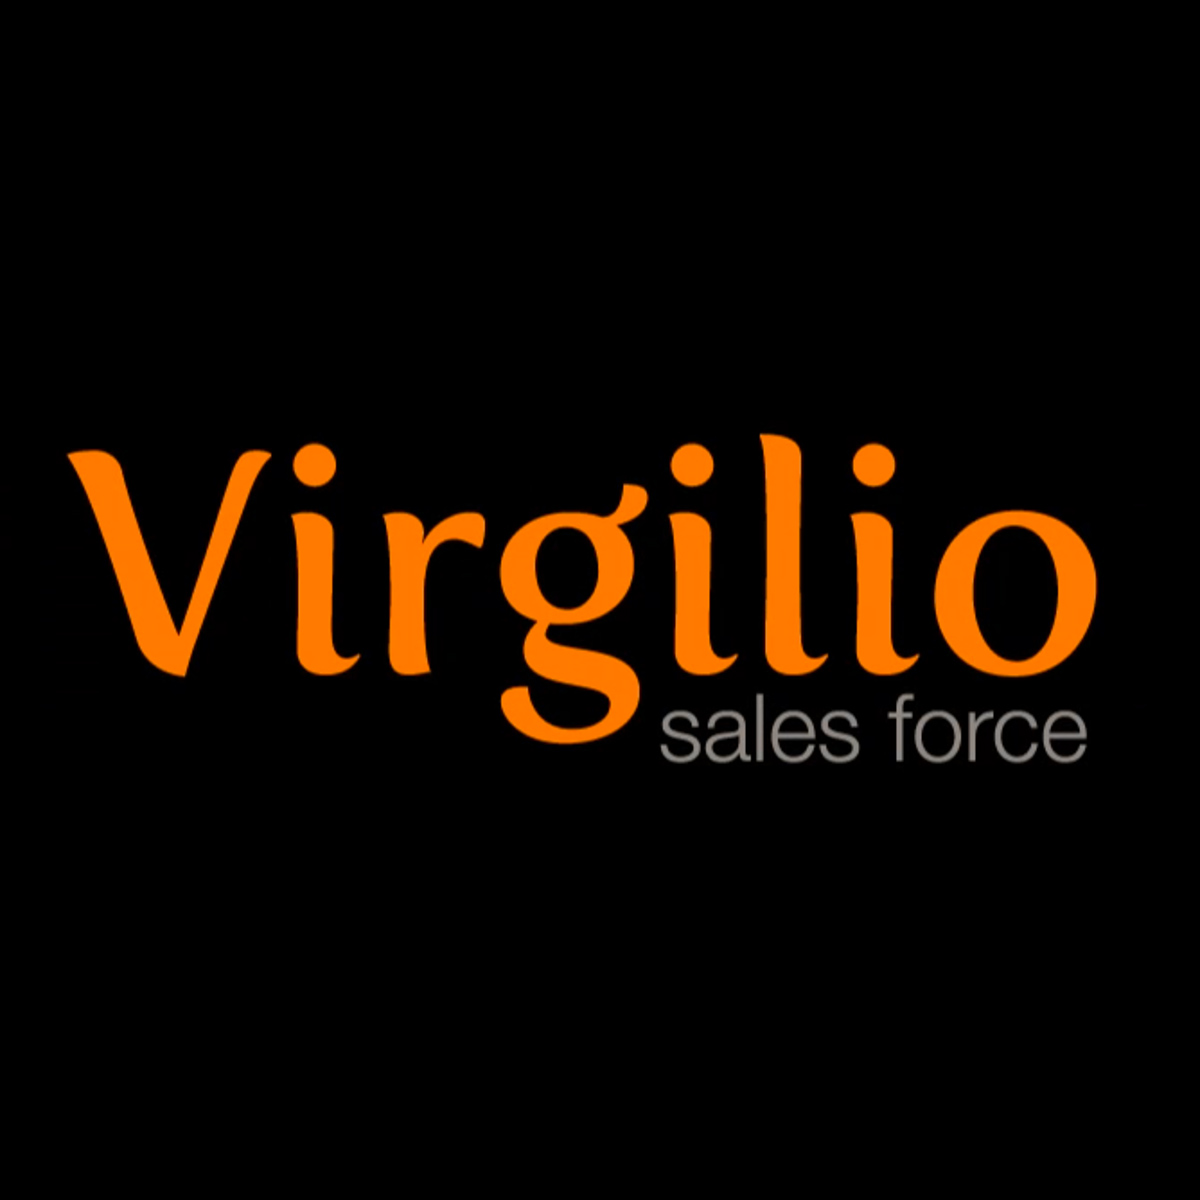 Virgilio-vsf logo